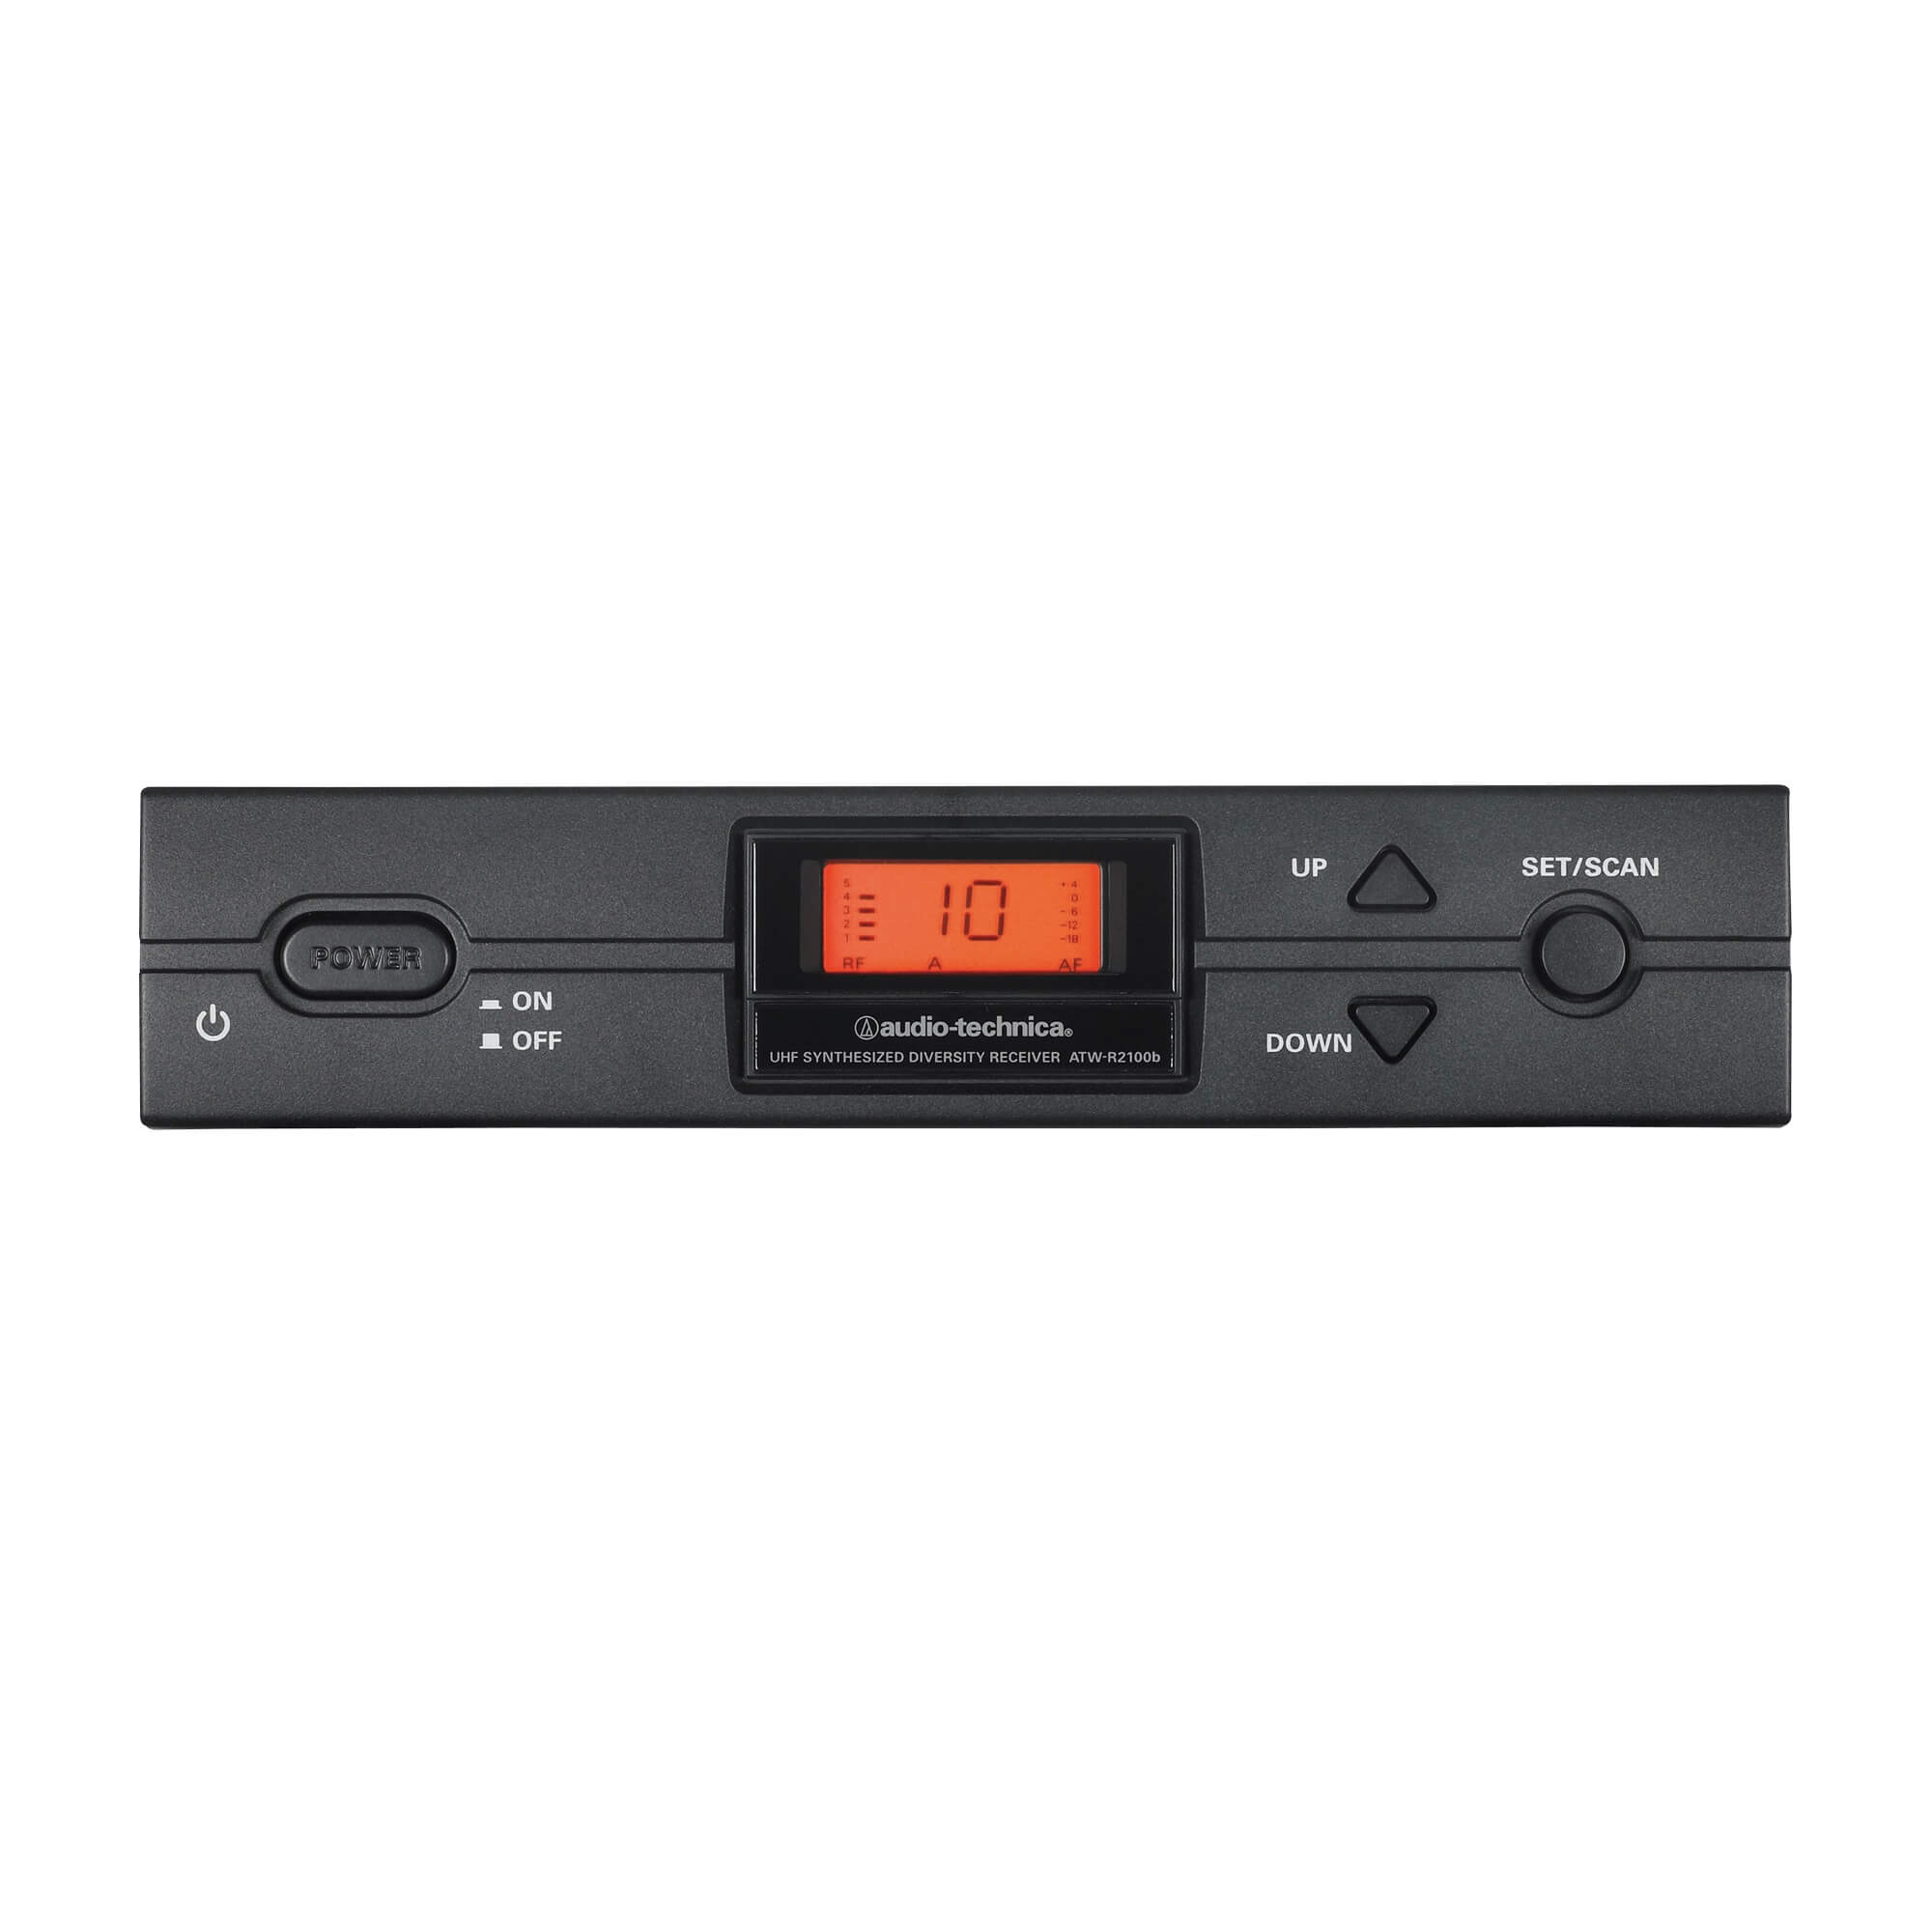 Audio-Technica ATW-R2100 receiver, front